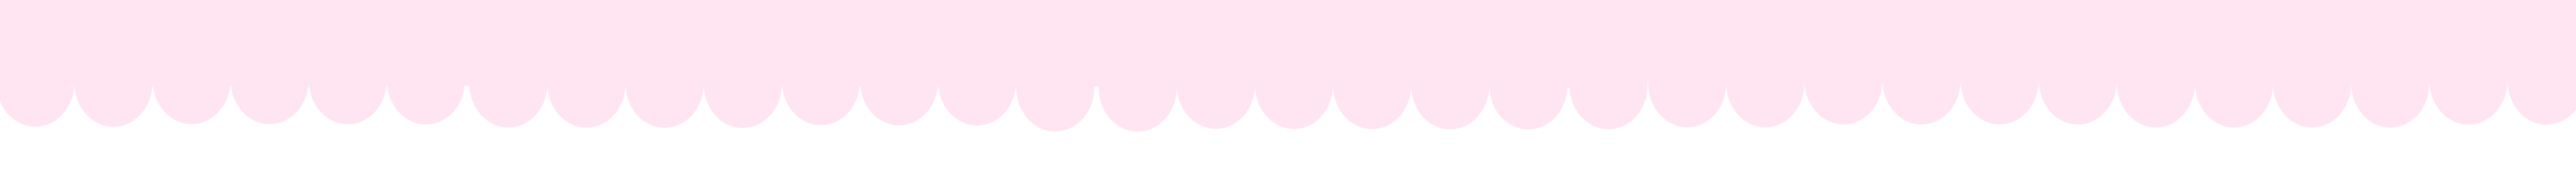 Bubble Rand rosa unten